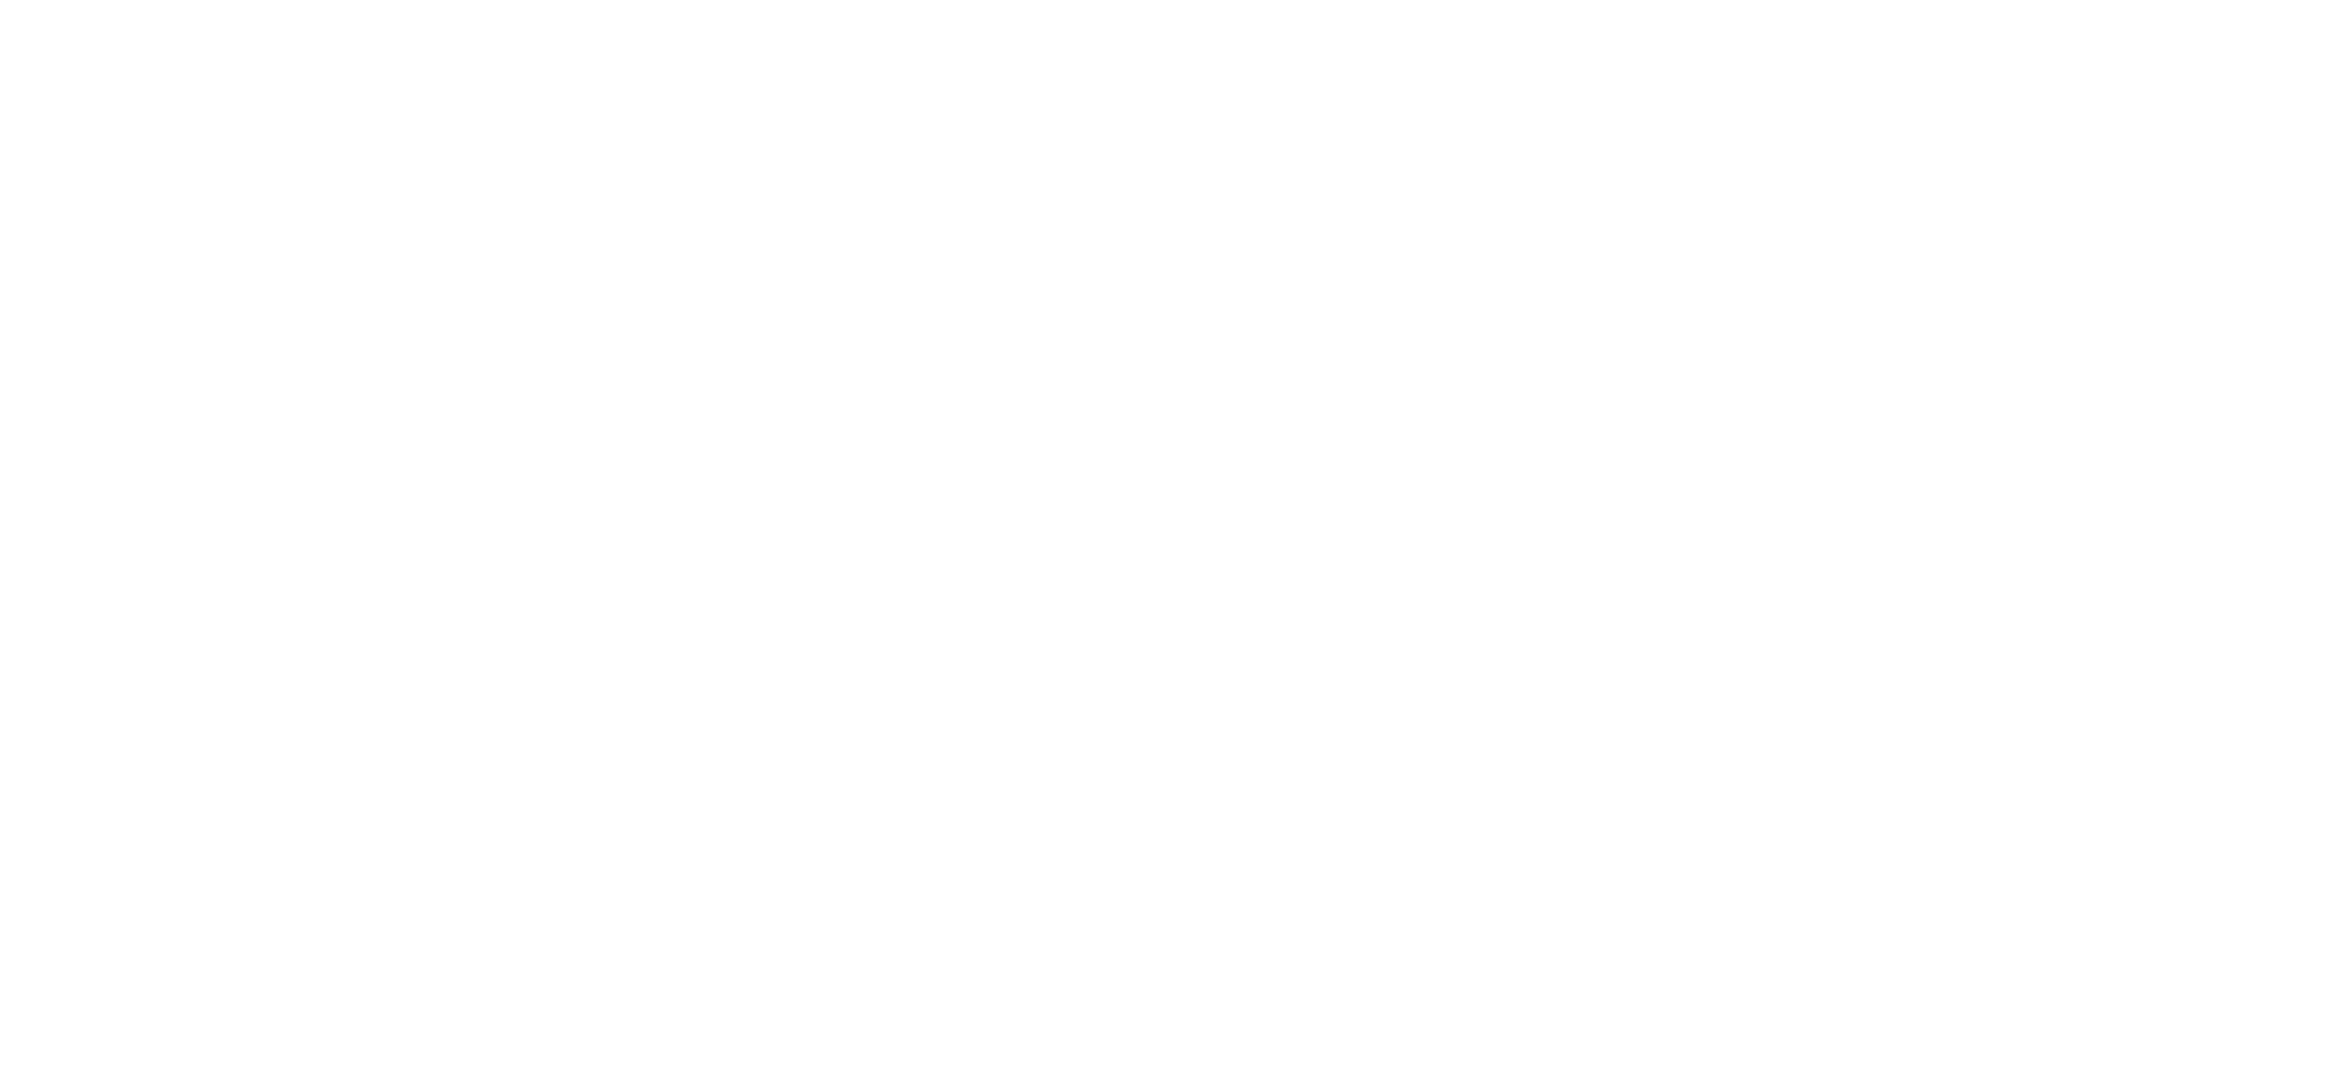 text that reads 'autumn inspiration'